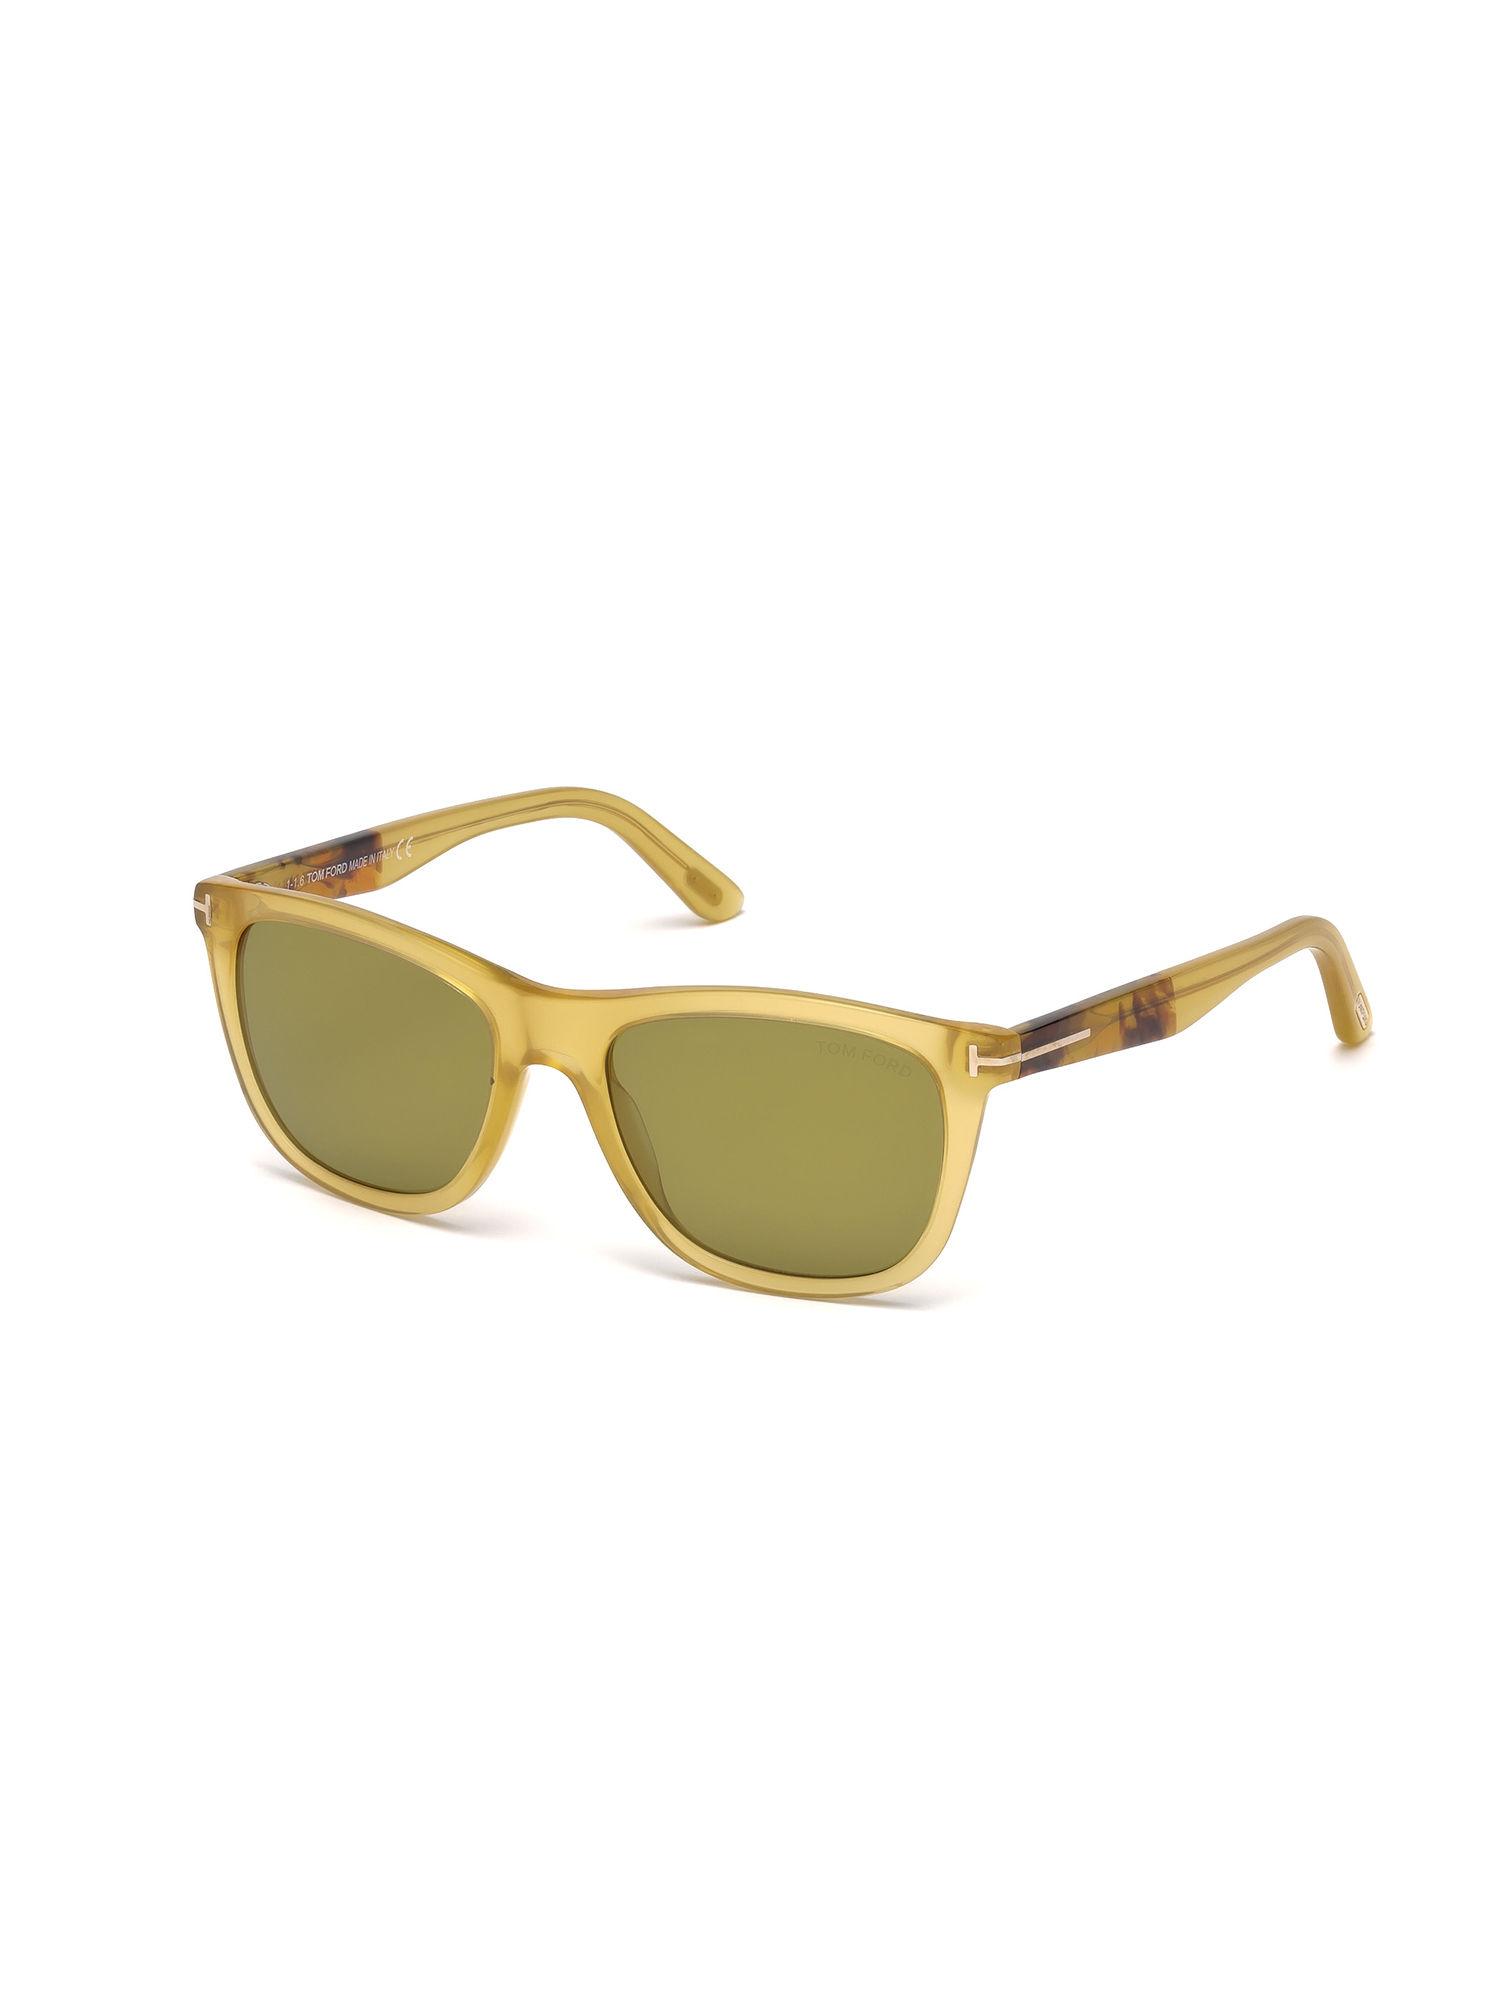 yellow-wayfarer-sunglasses---ft0500-54-41n